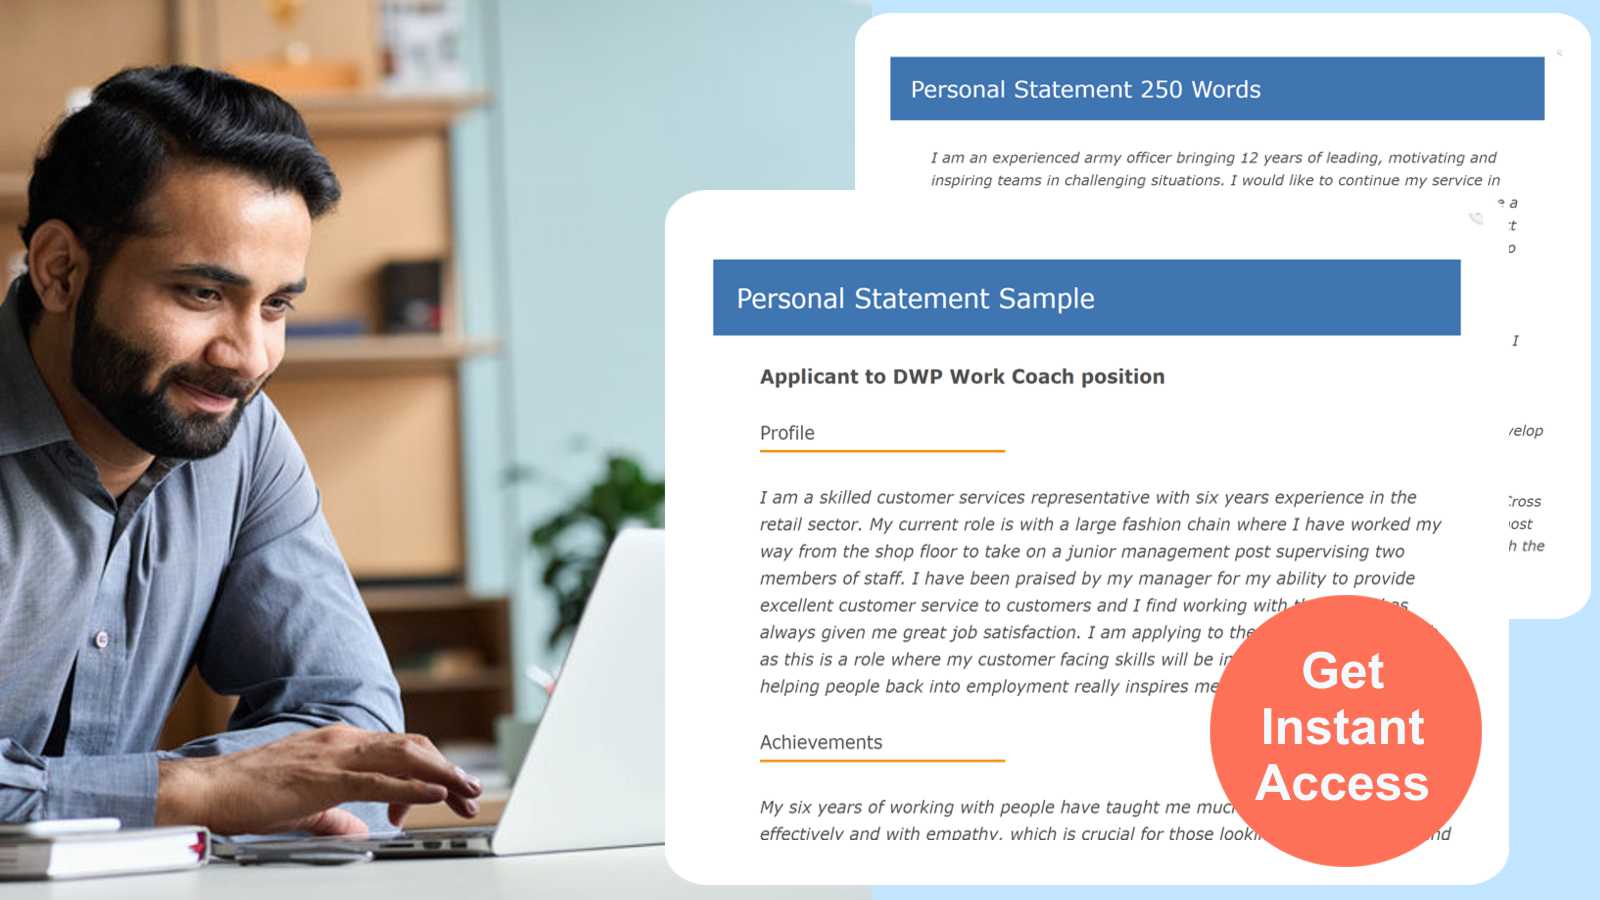 personal statement help service